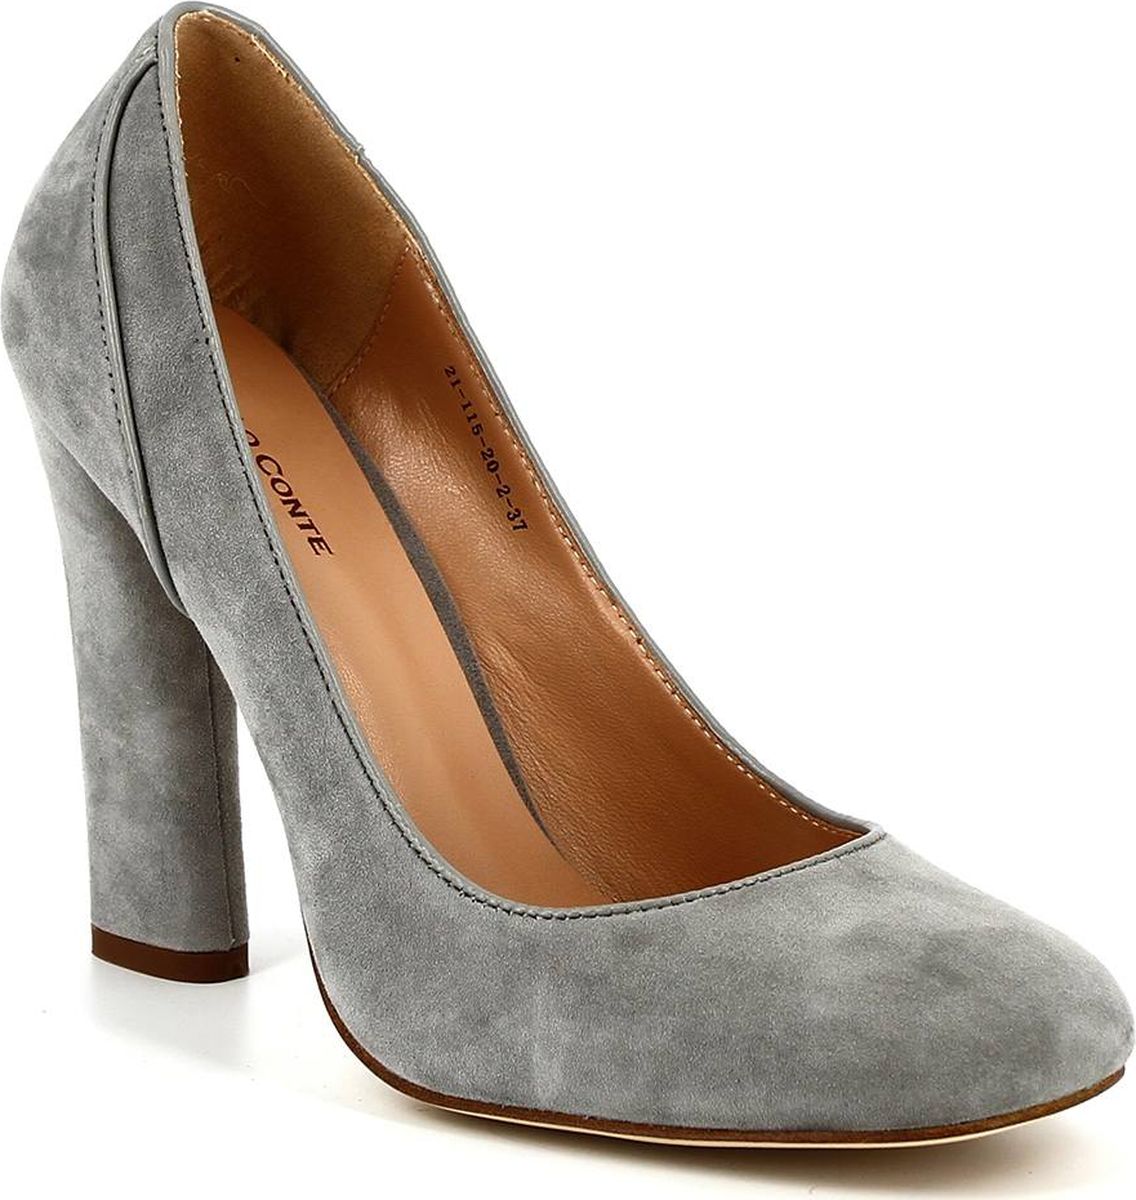 Туфли женские Paolo Conte, цвет: серый. 21-115-20-2. Размер 39